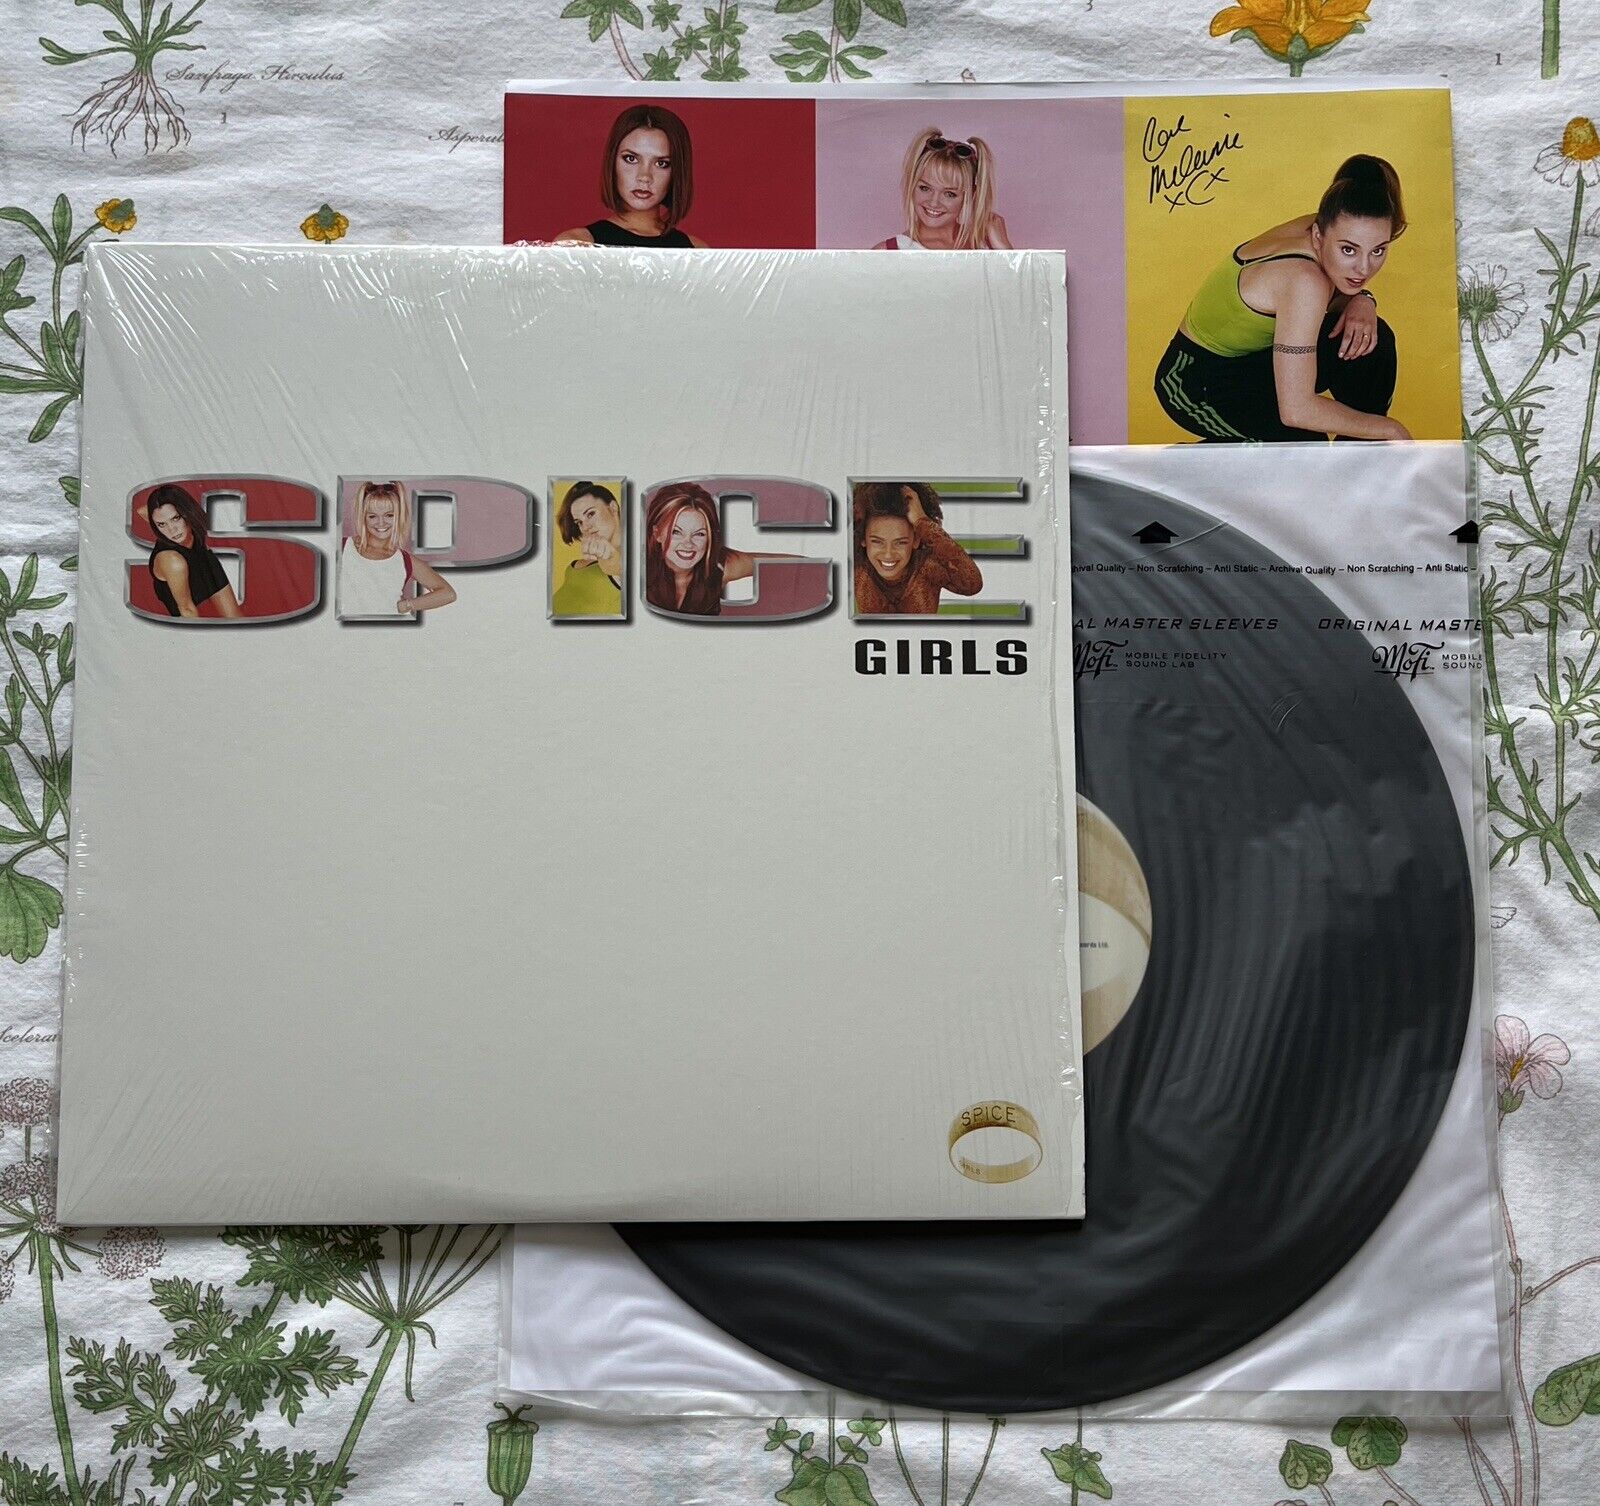 Spice Girls - Spice (Black Vinyl, 2015)